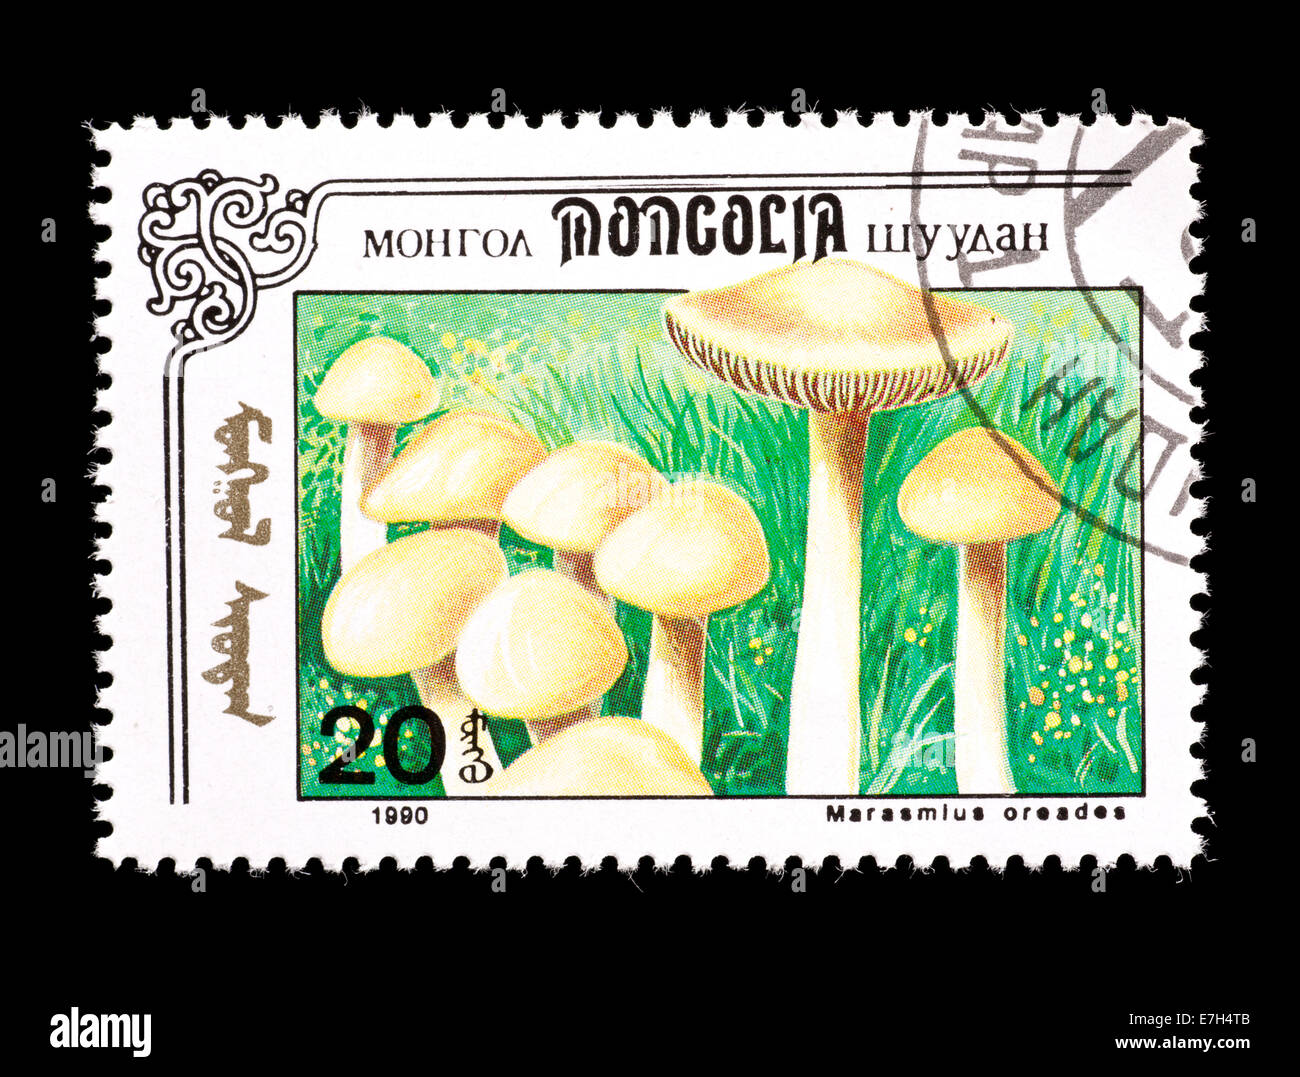 Postage stamp from Mongolia depicting Scotch bonnet or fairy ring mushrooms (Marasmius oreades) Stock Photo